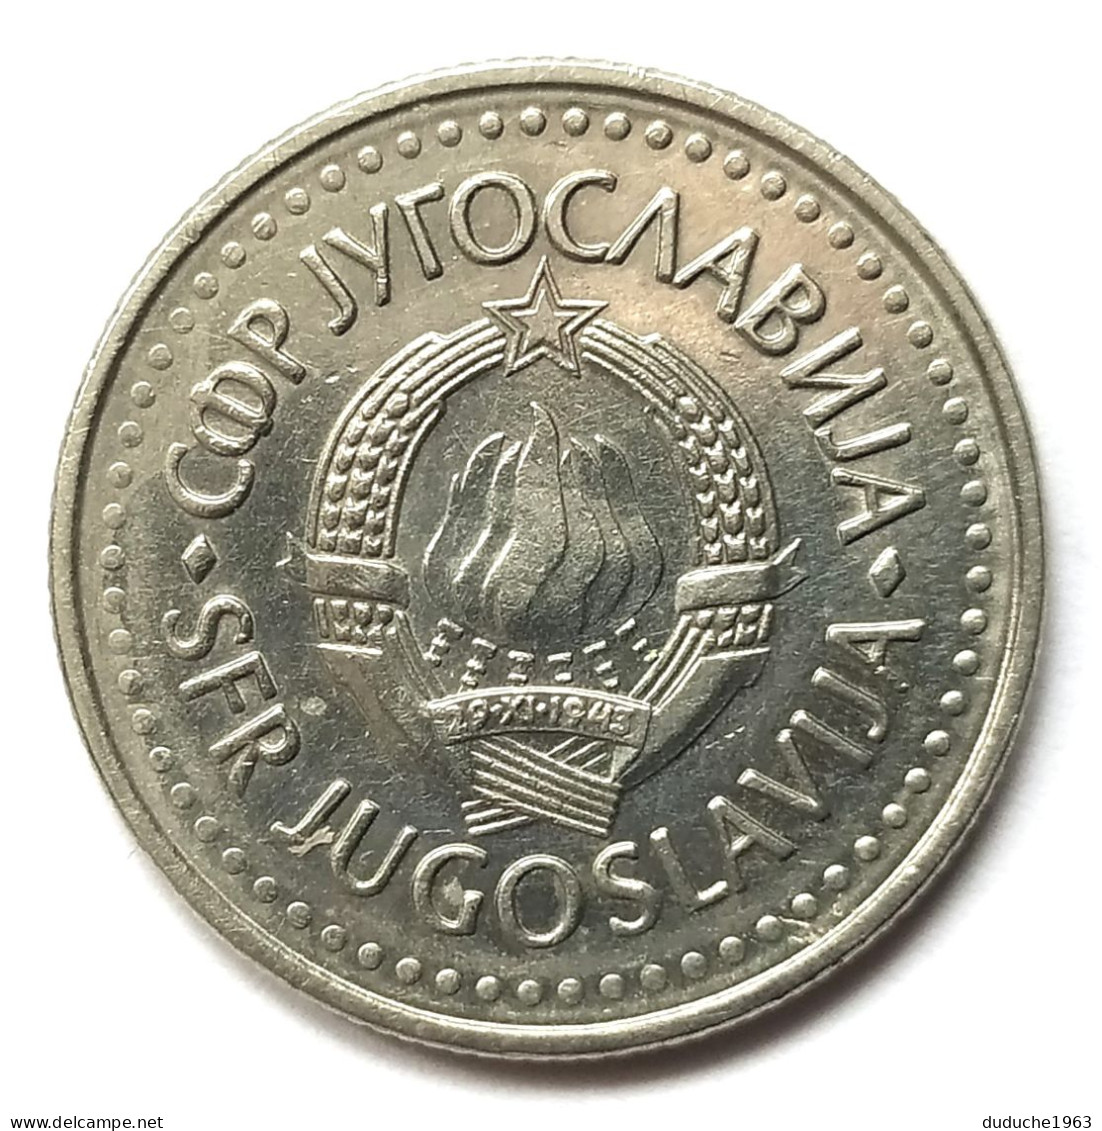 Yougoslavie - 10 Dinar 1985 - Yugoslavia